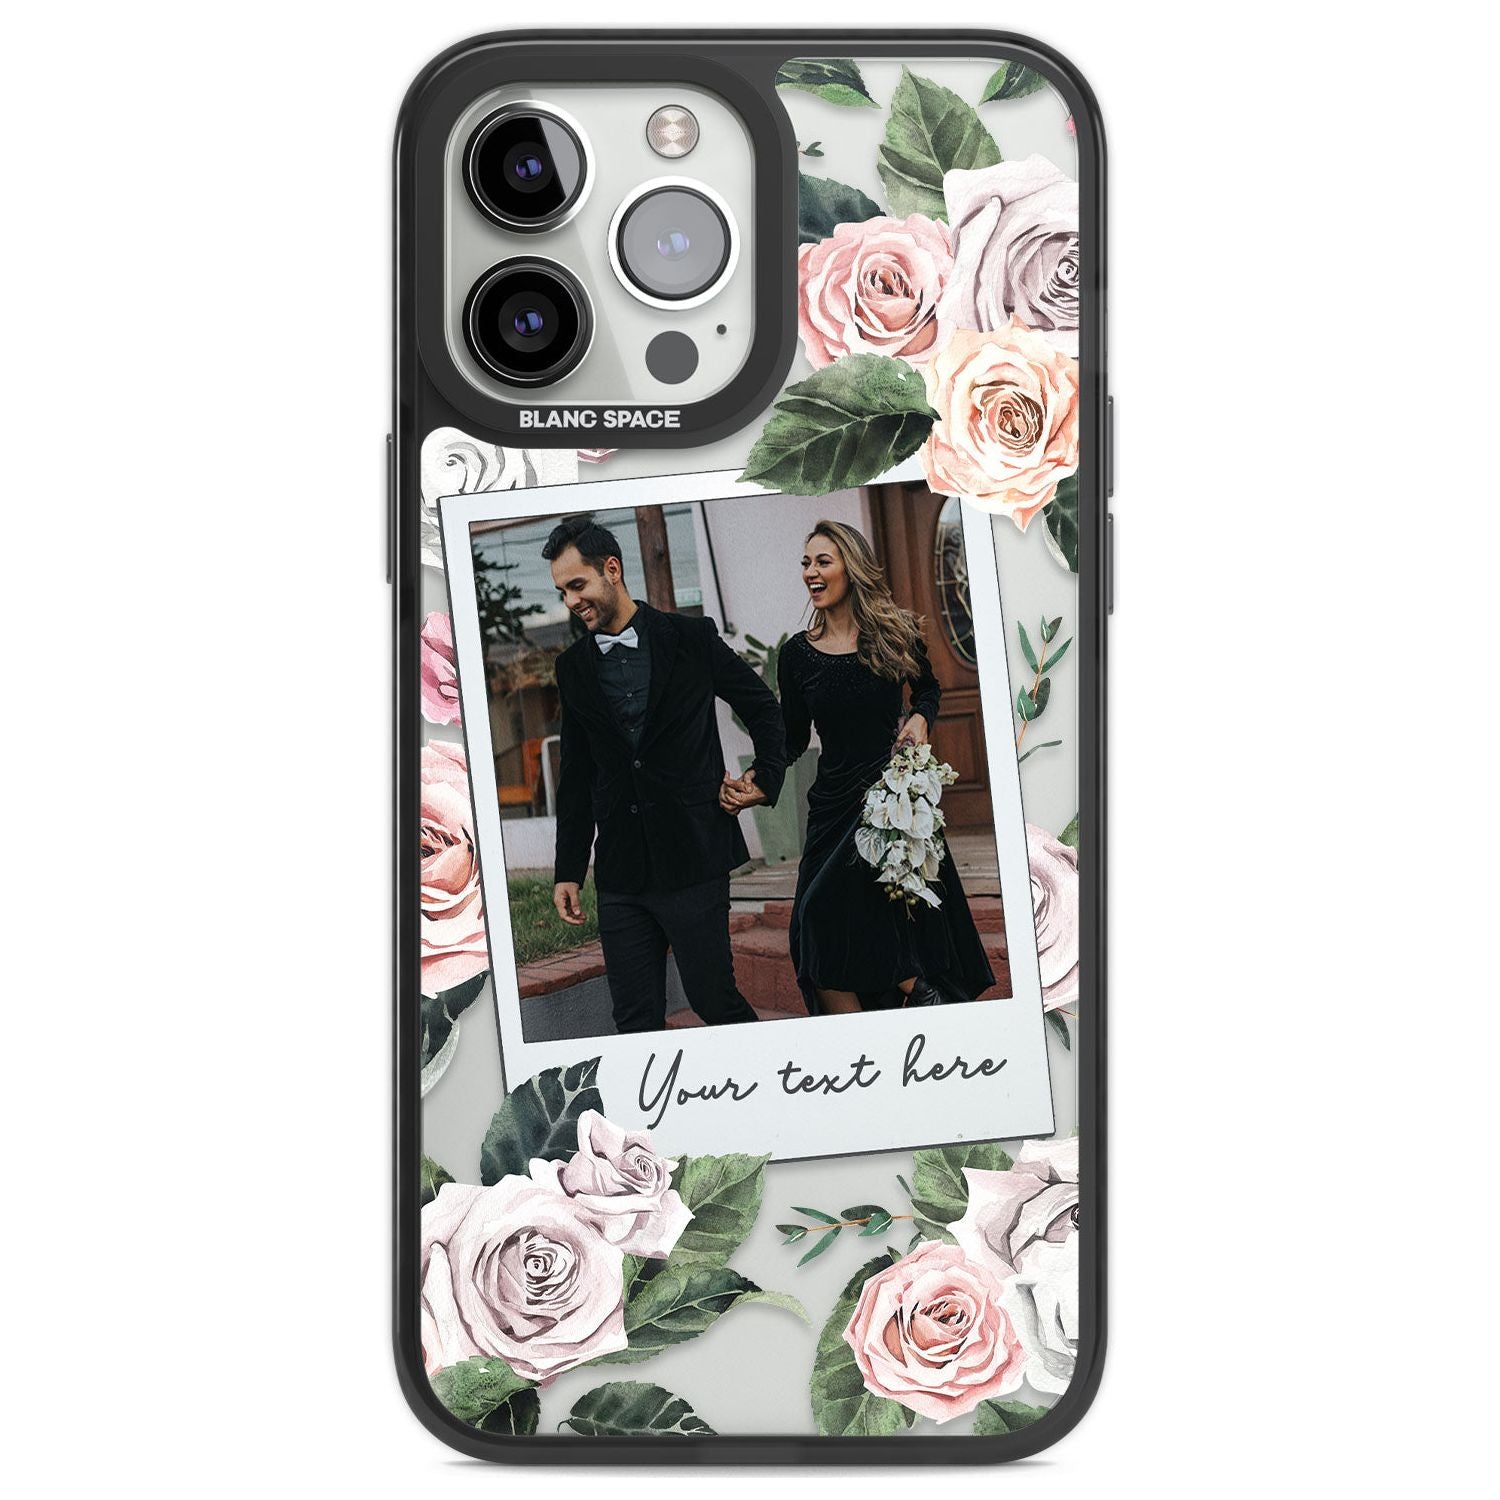 Personalised Floral Instant Film Photo Custom Phone Case iPhone 13 Pro Max / Black Impact Case,iPhone 14 Pro Max / Black Impact Case Blanc Space